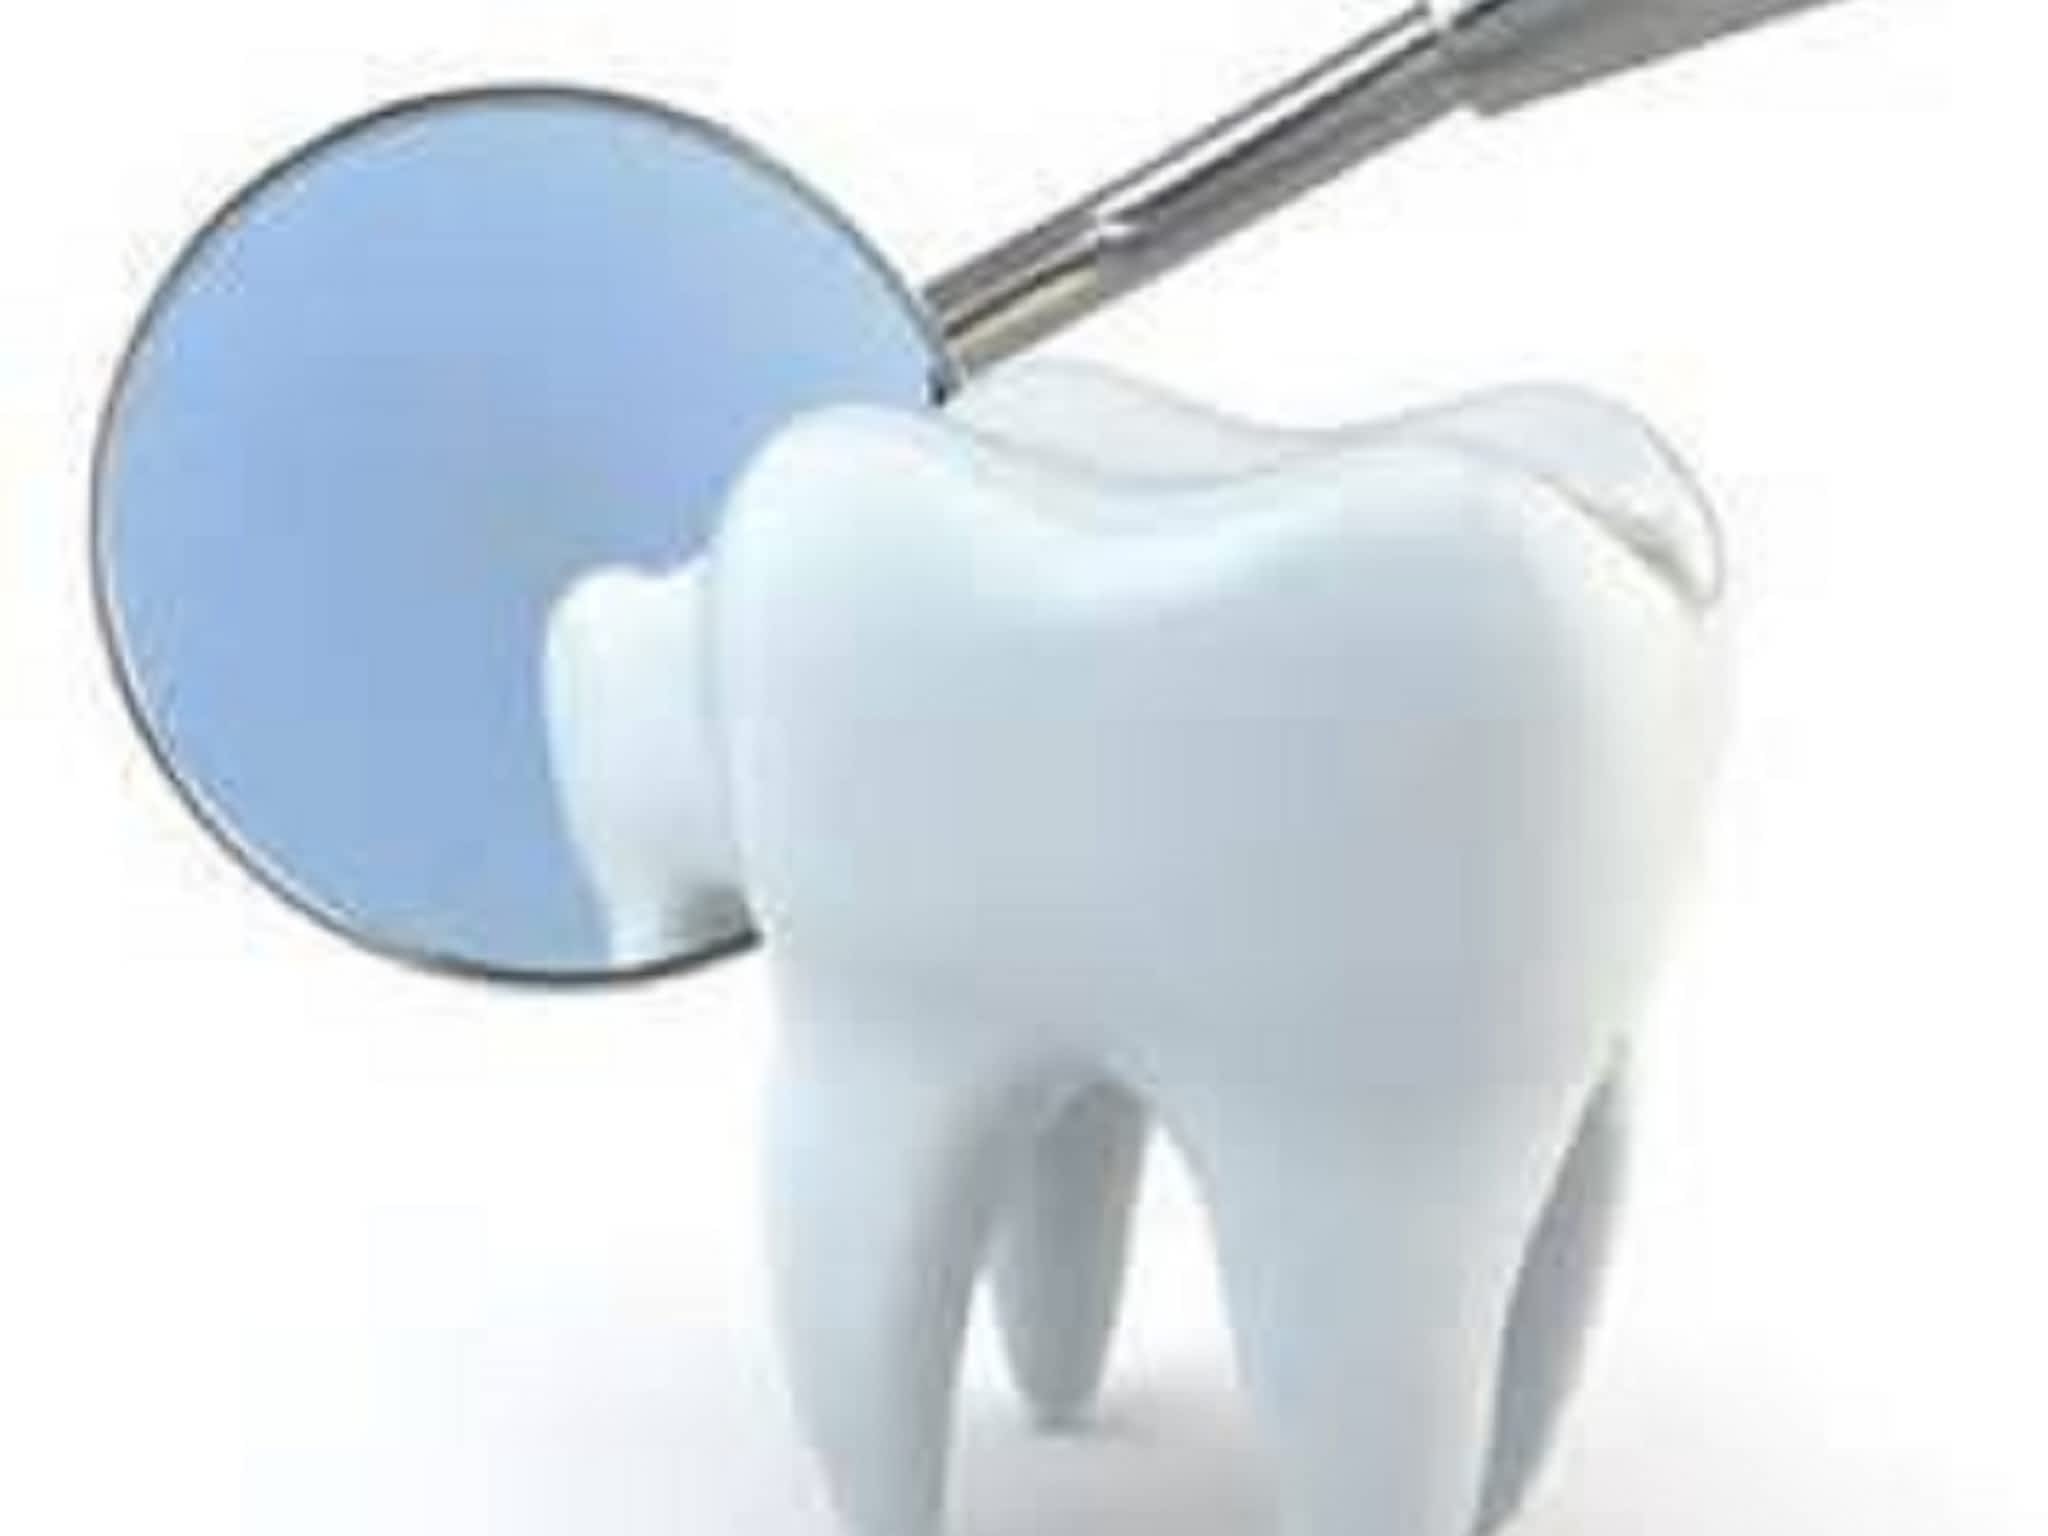 photo Dr Joseph Serhan - Chirurgien Dentiste